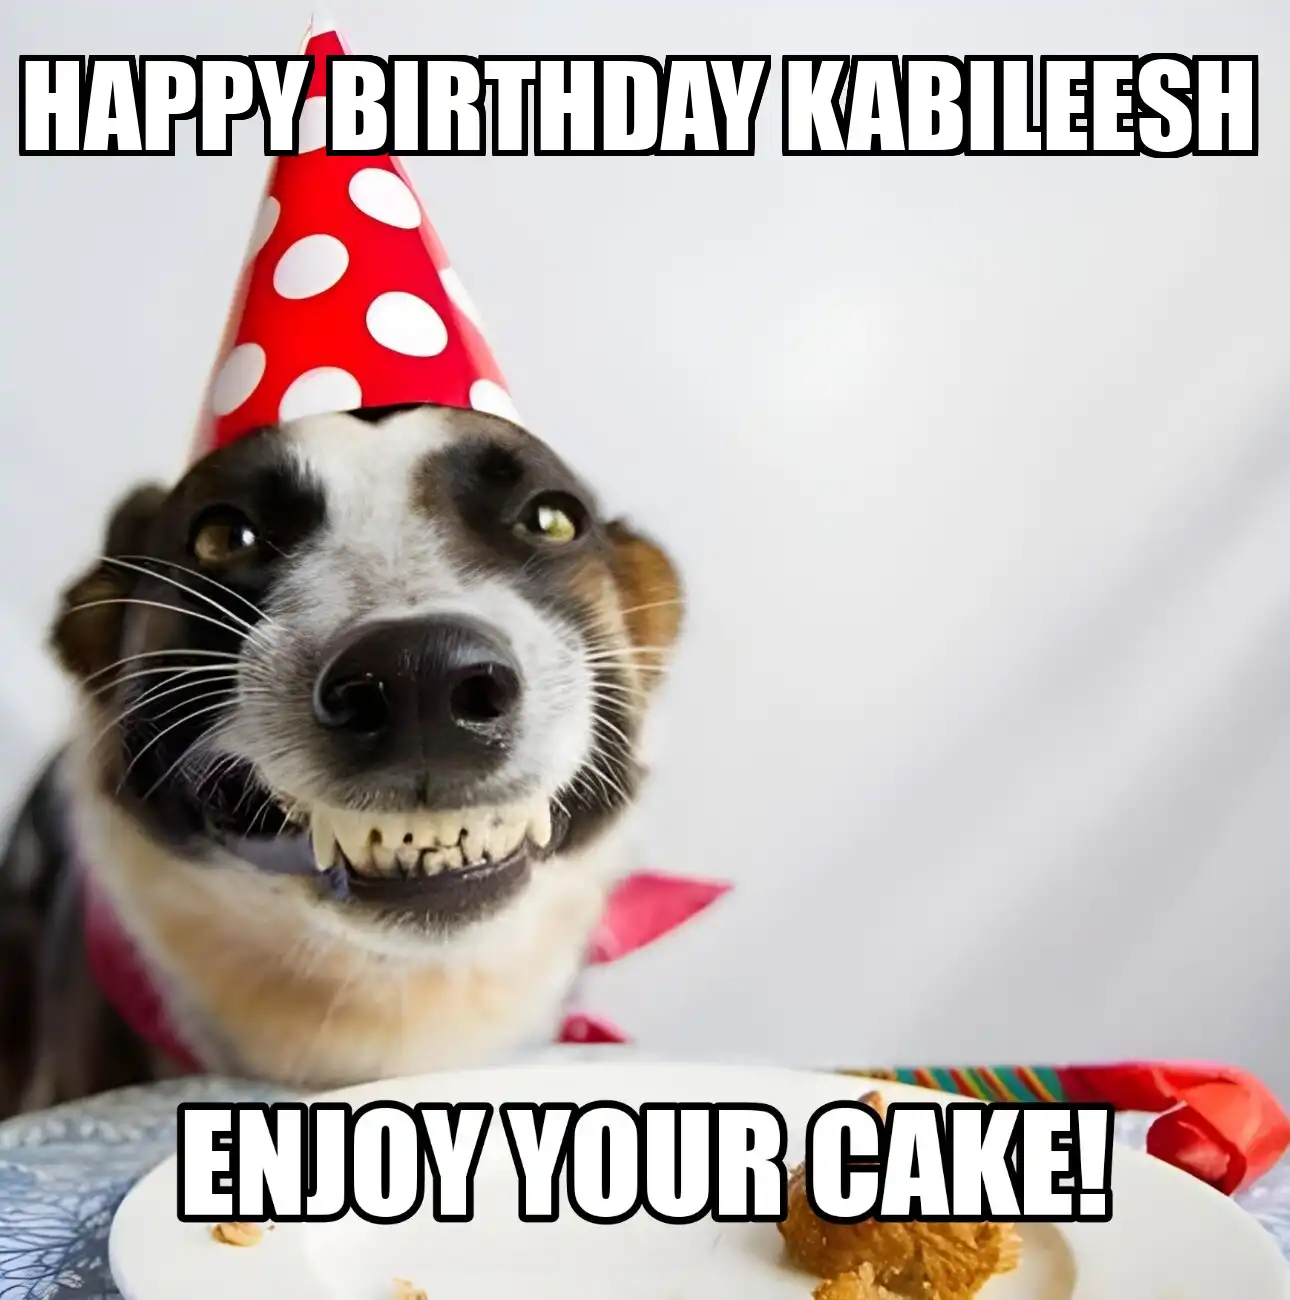 Happy Birthday Kabileesh Enjoy Your Cake Dog Meme